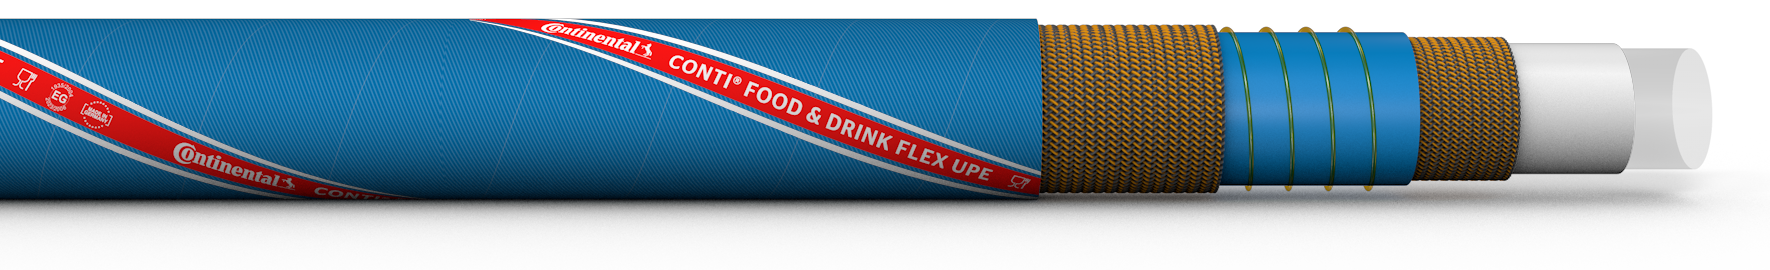 CONTI® FOOD & DRINK FLEX UPE